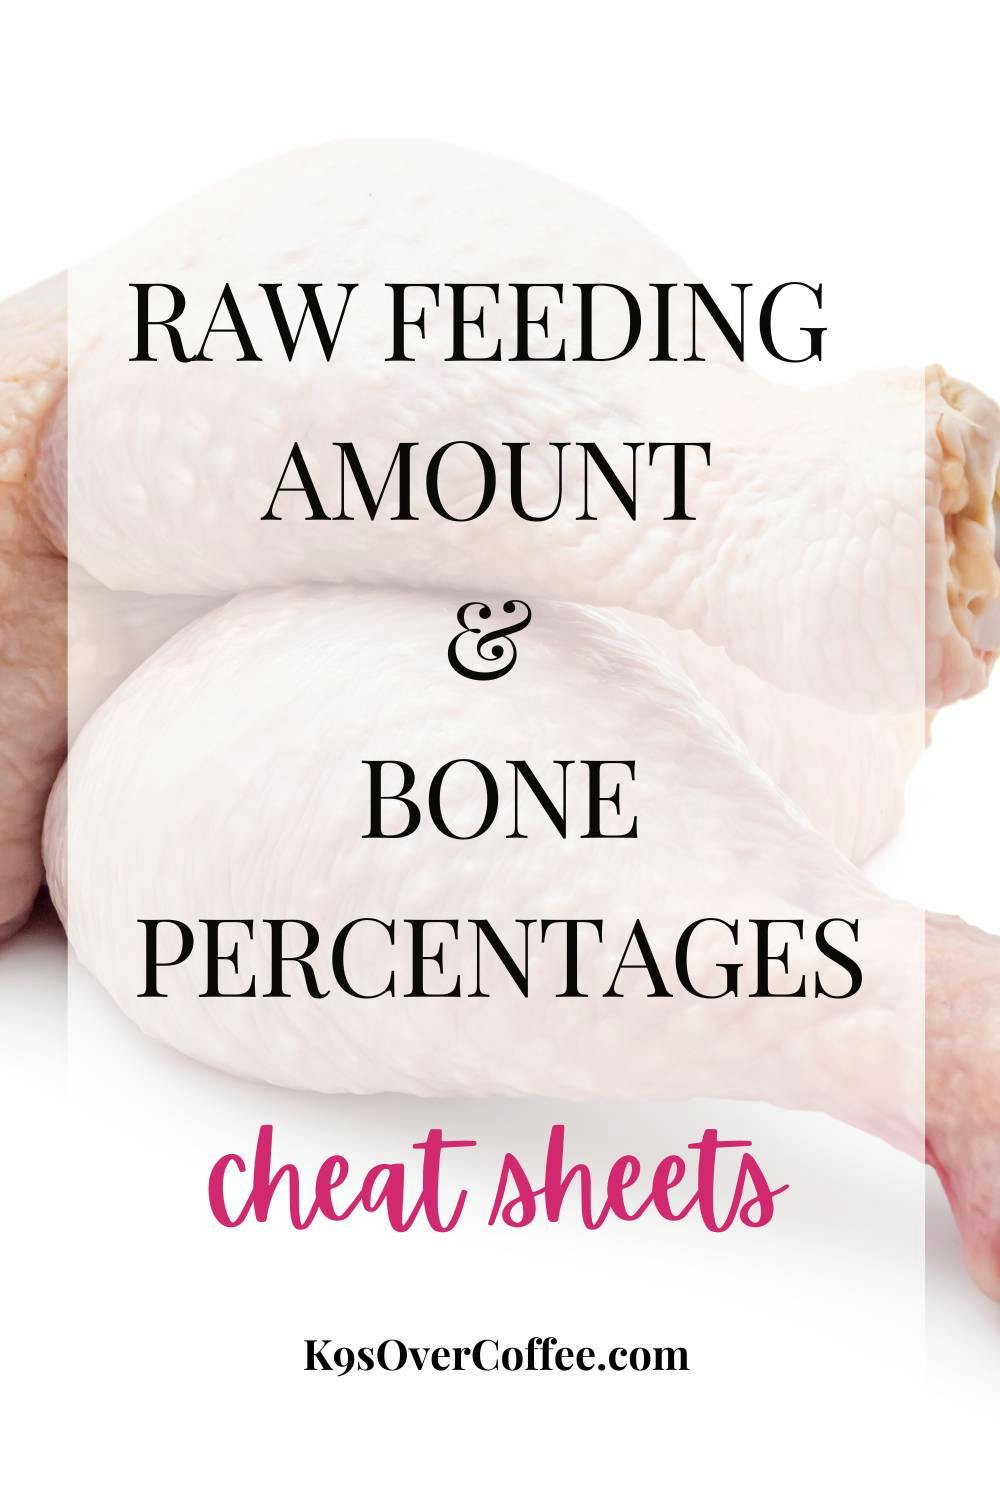 raw feeding amount and bone percentages cheat sheets